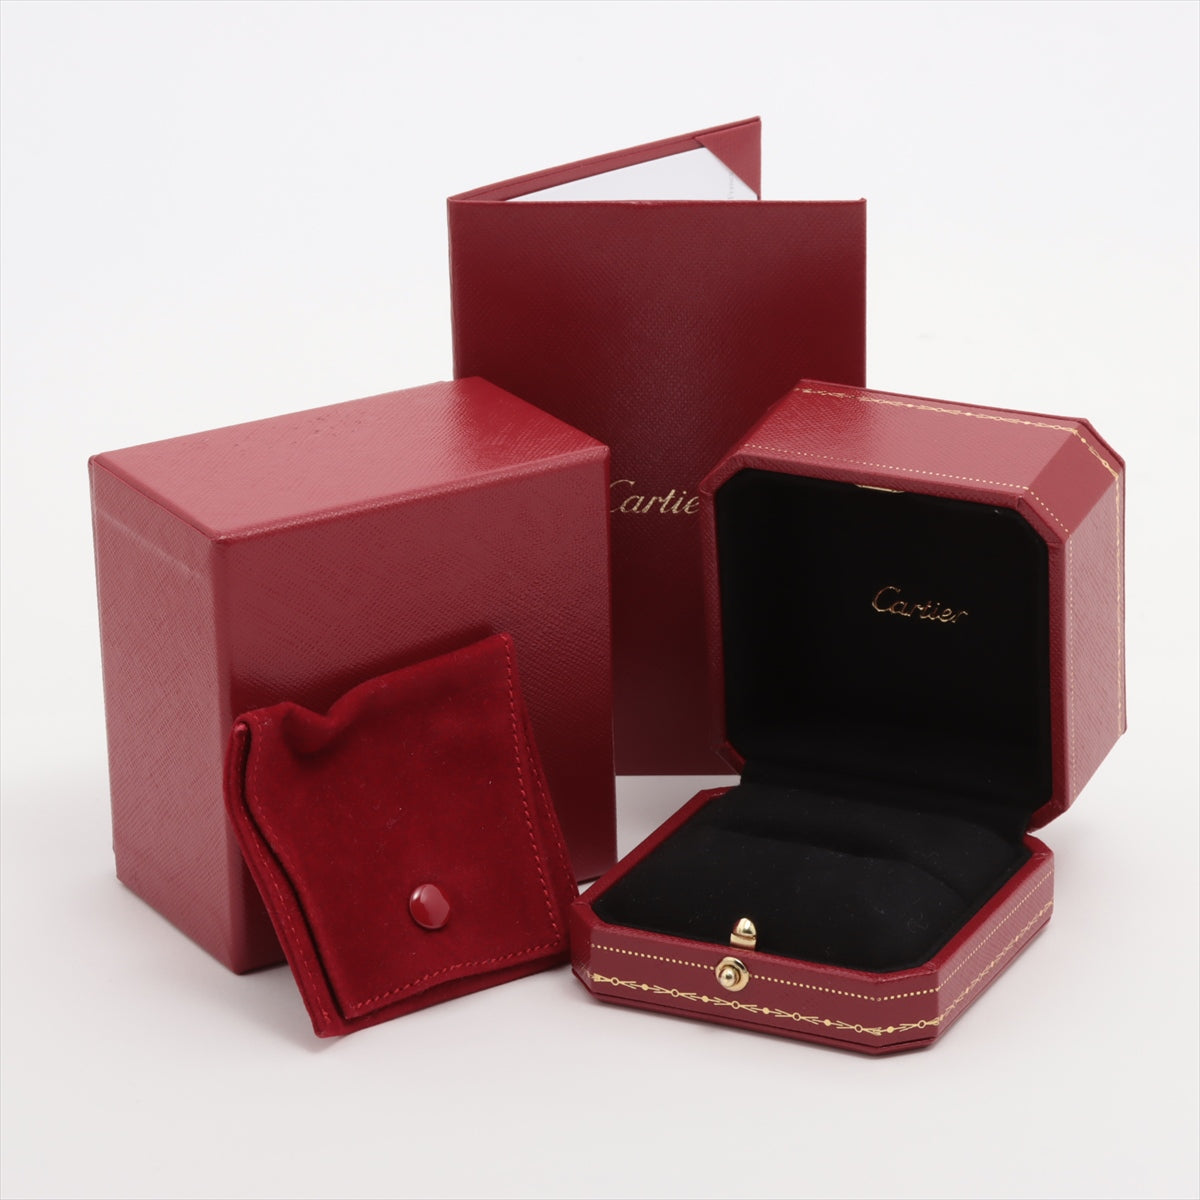 Cartier Three-Color Ring 750 (YG  Pg × WG) 7.4g 62 EVA